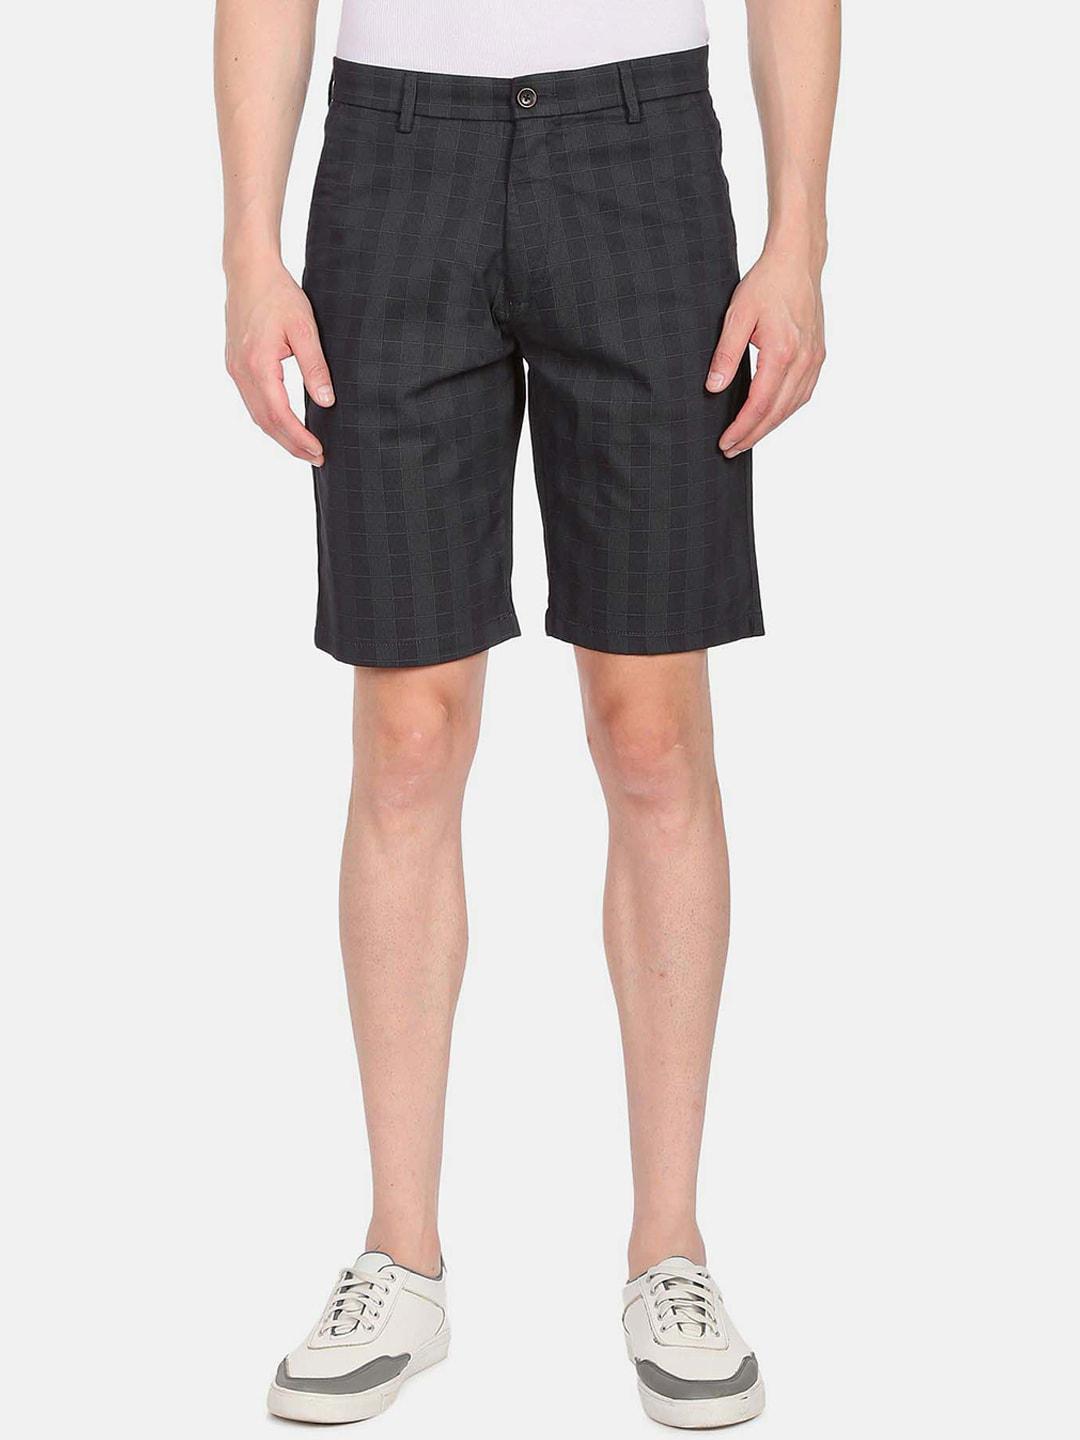 arrow-sport-men-mid-rise-micro-check-checked-shorts